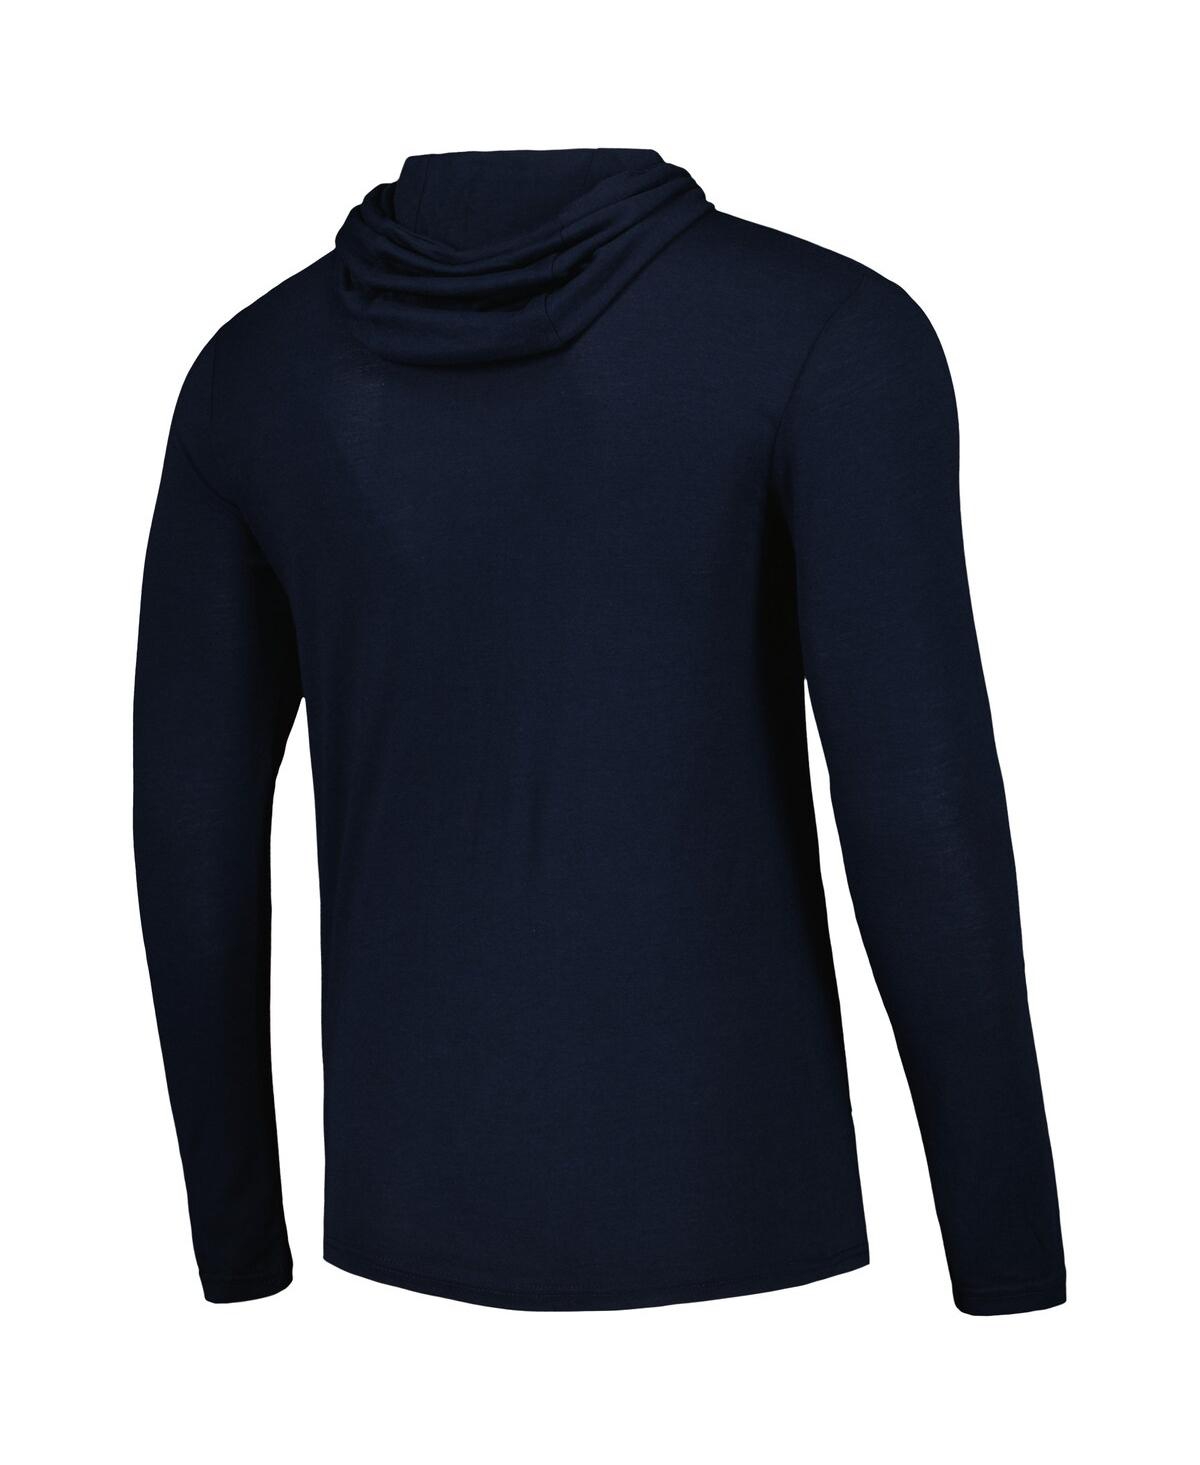 Shop Sportiqe Men's And Women's  Navy Dallas Mavericks Rowan Tri-blend Long Sleeve Hoodie T-shirt